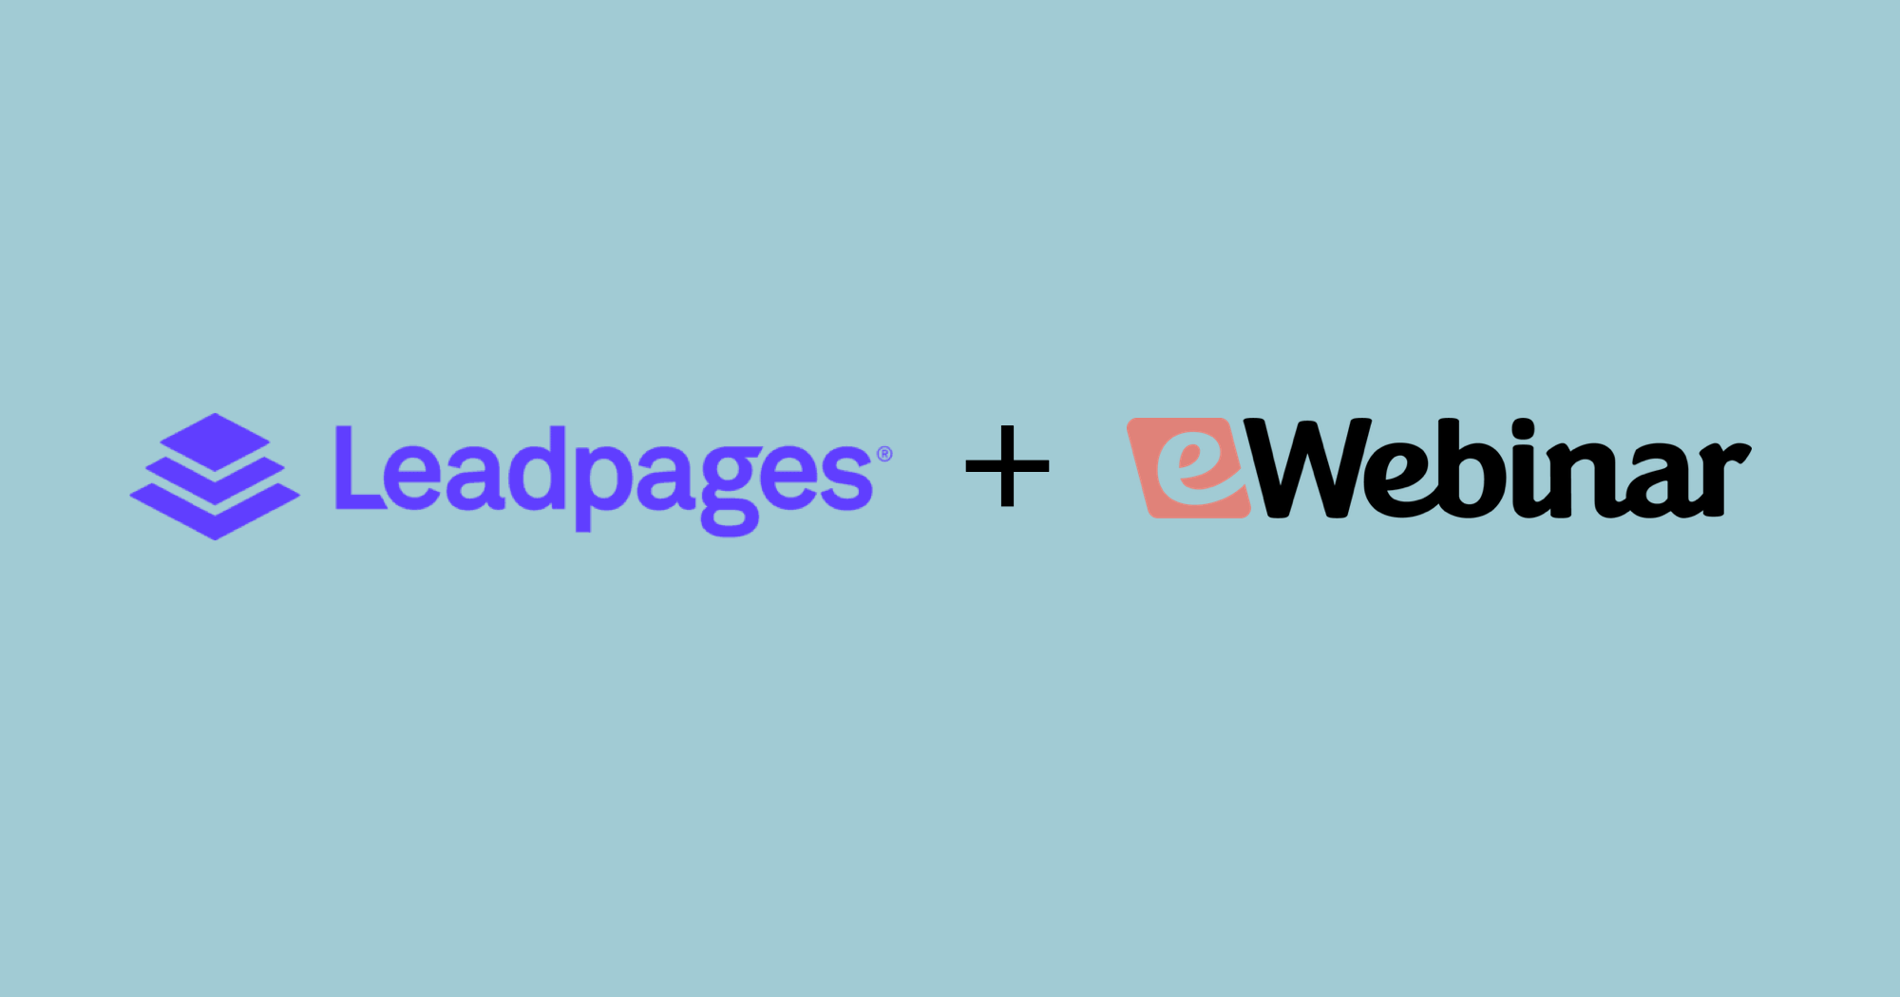 eWebinar s'associe à Leadpages